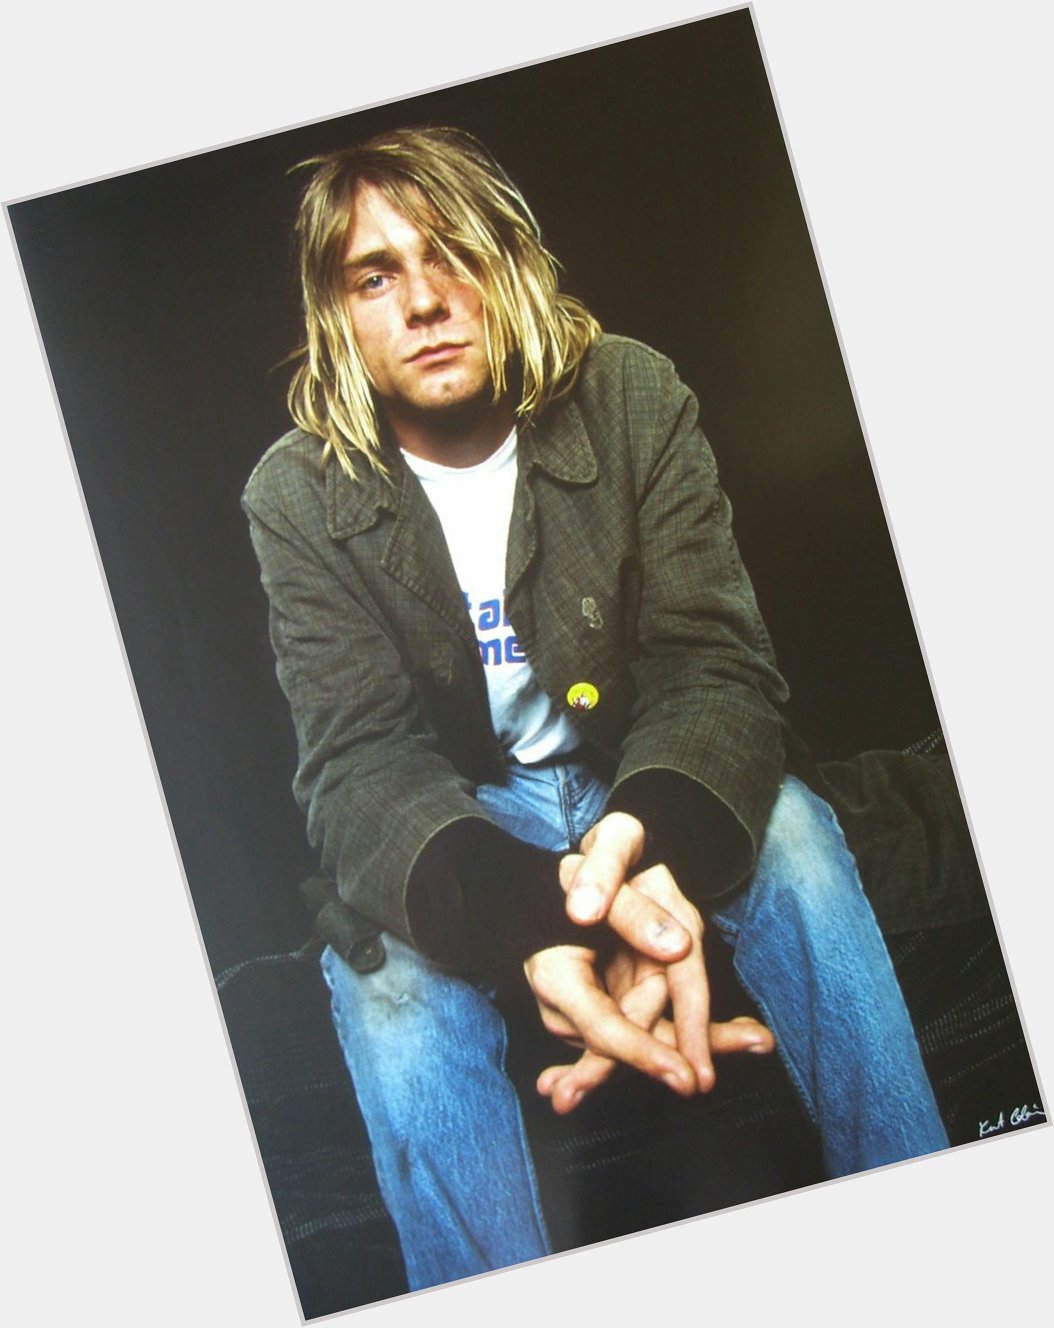 Happy birthday to the last true rock star, lead singer of Nirvana...Kurt Cobain (R.I.P) 